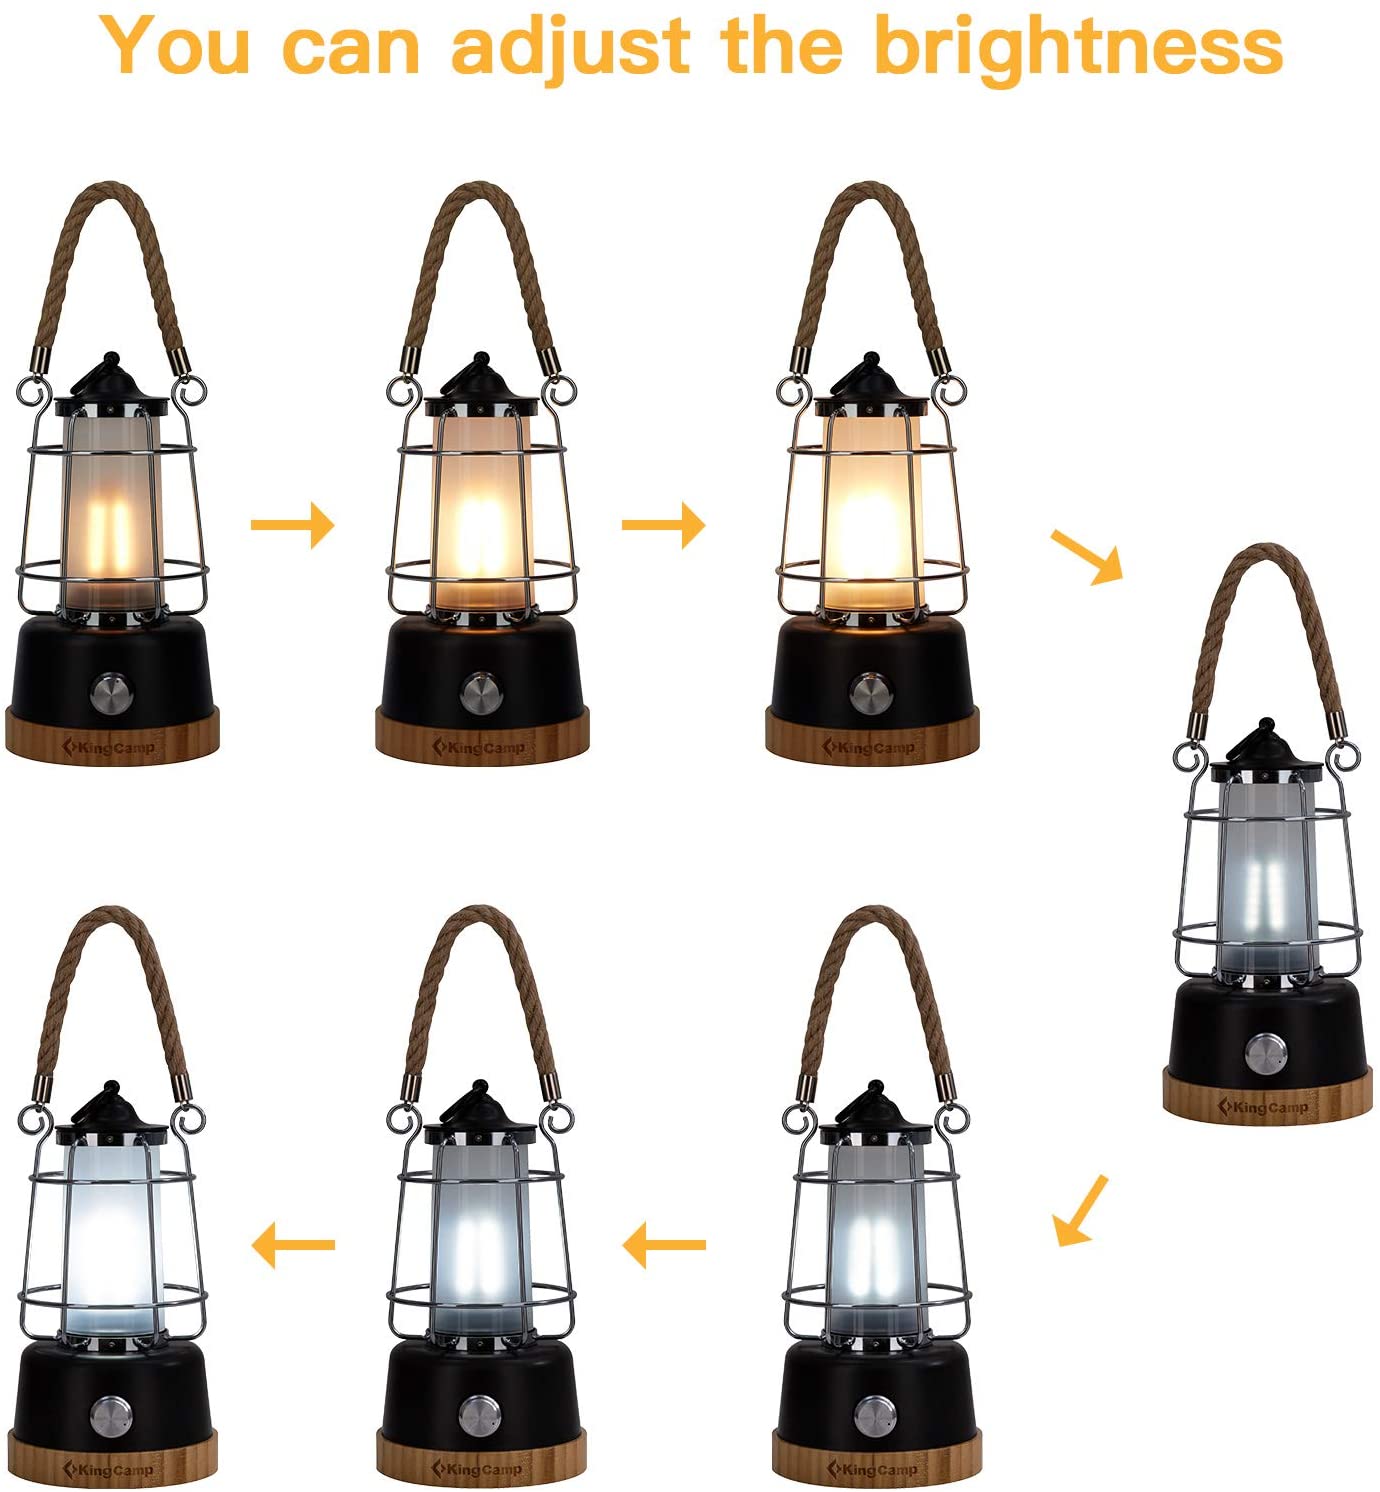 KingCamp Adjustable Brightness Rechargeable Lantern